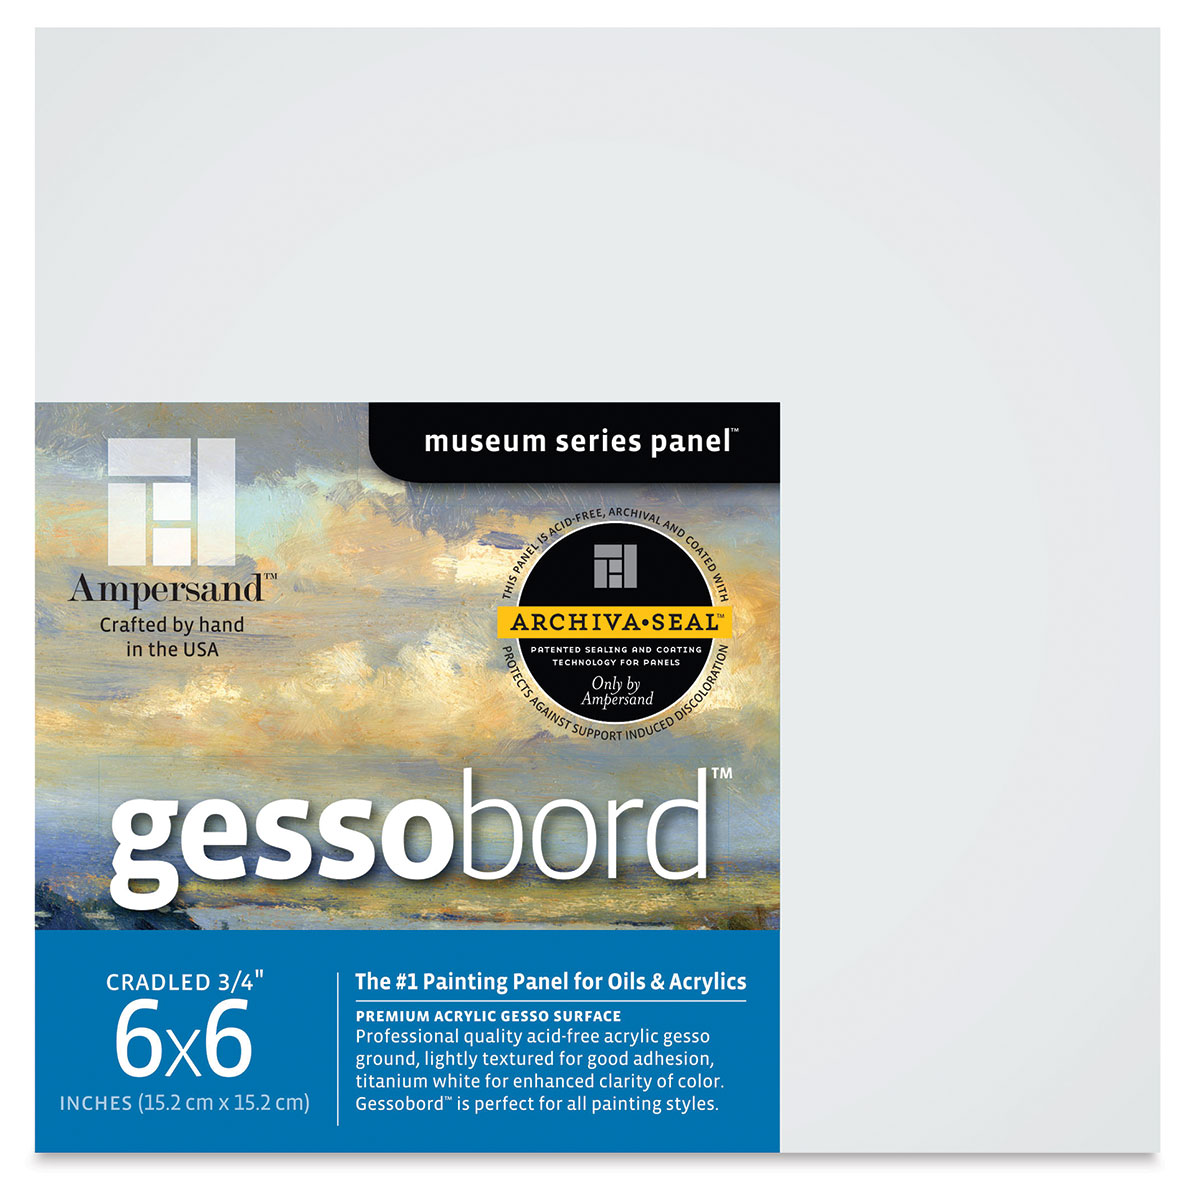 Ampersand Gessobord - 3/4 Cradled 16 x 20